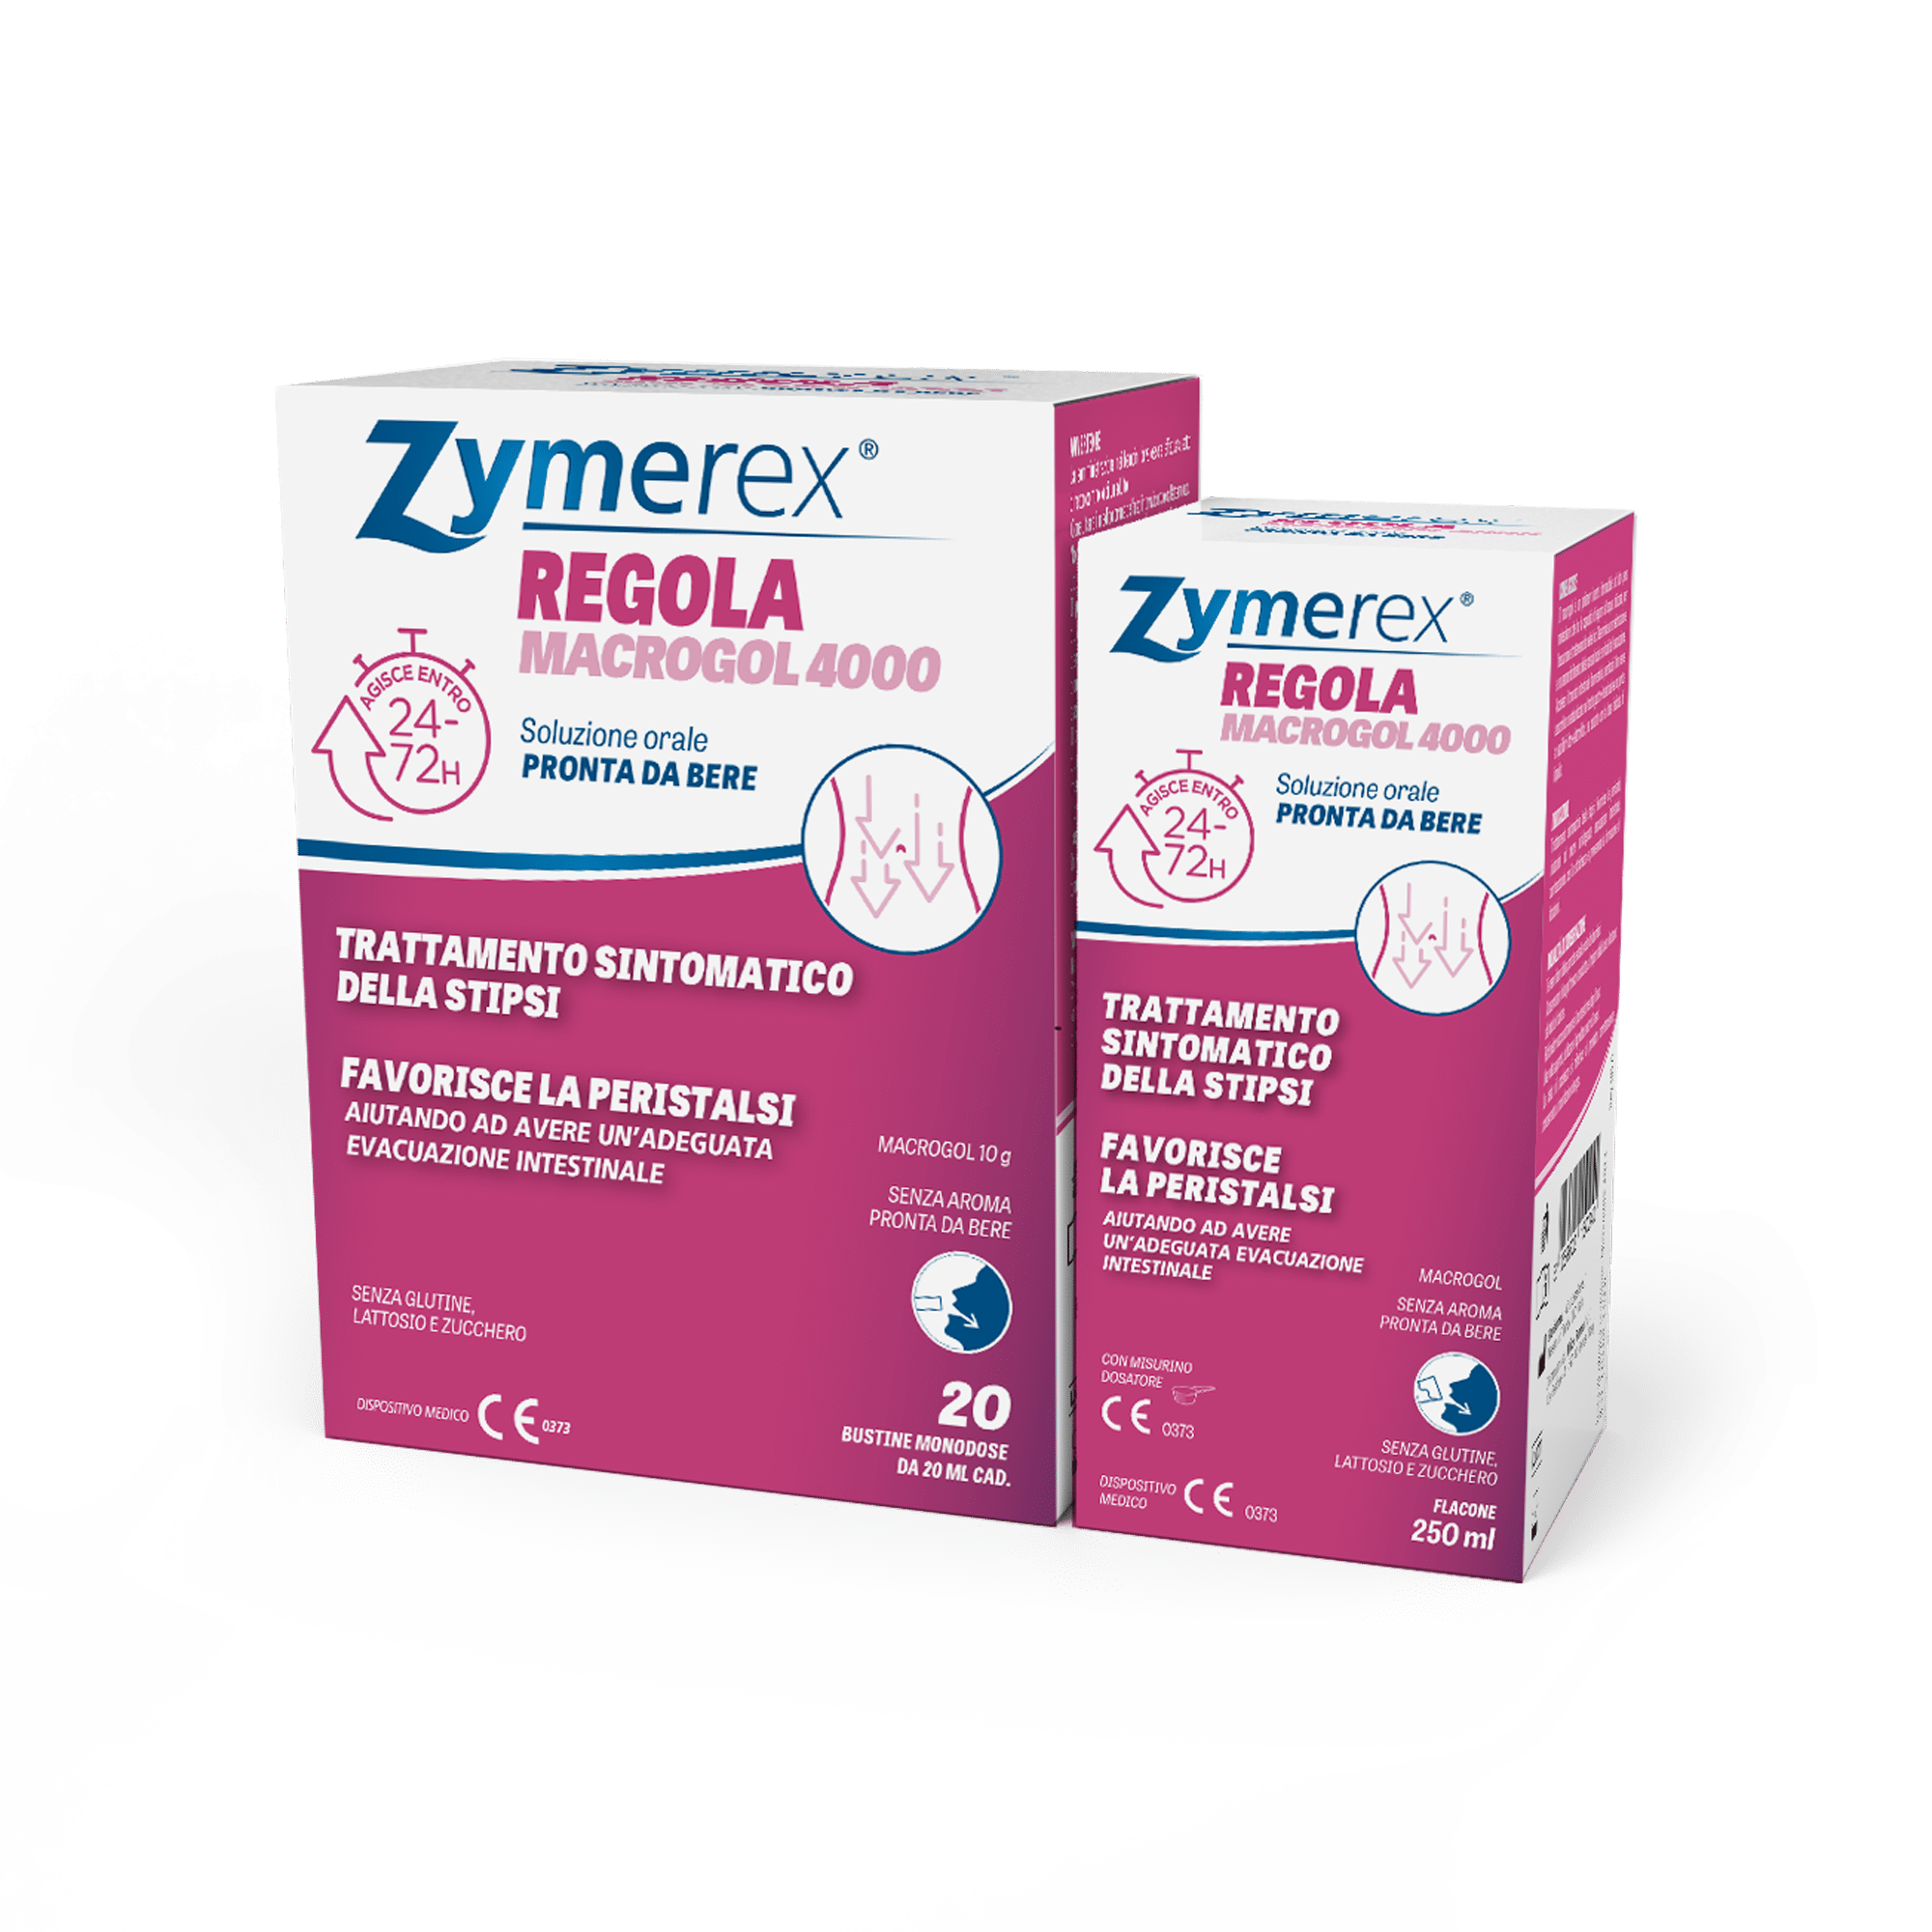 zymerex regola macrogol<br />
